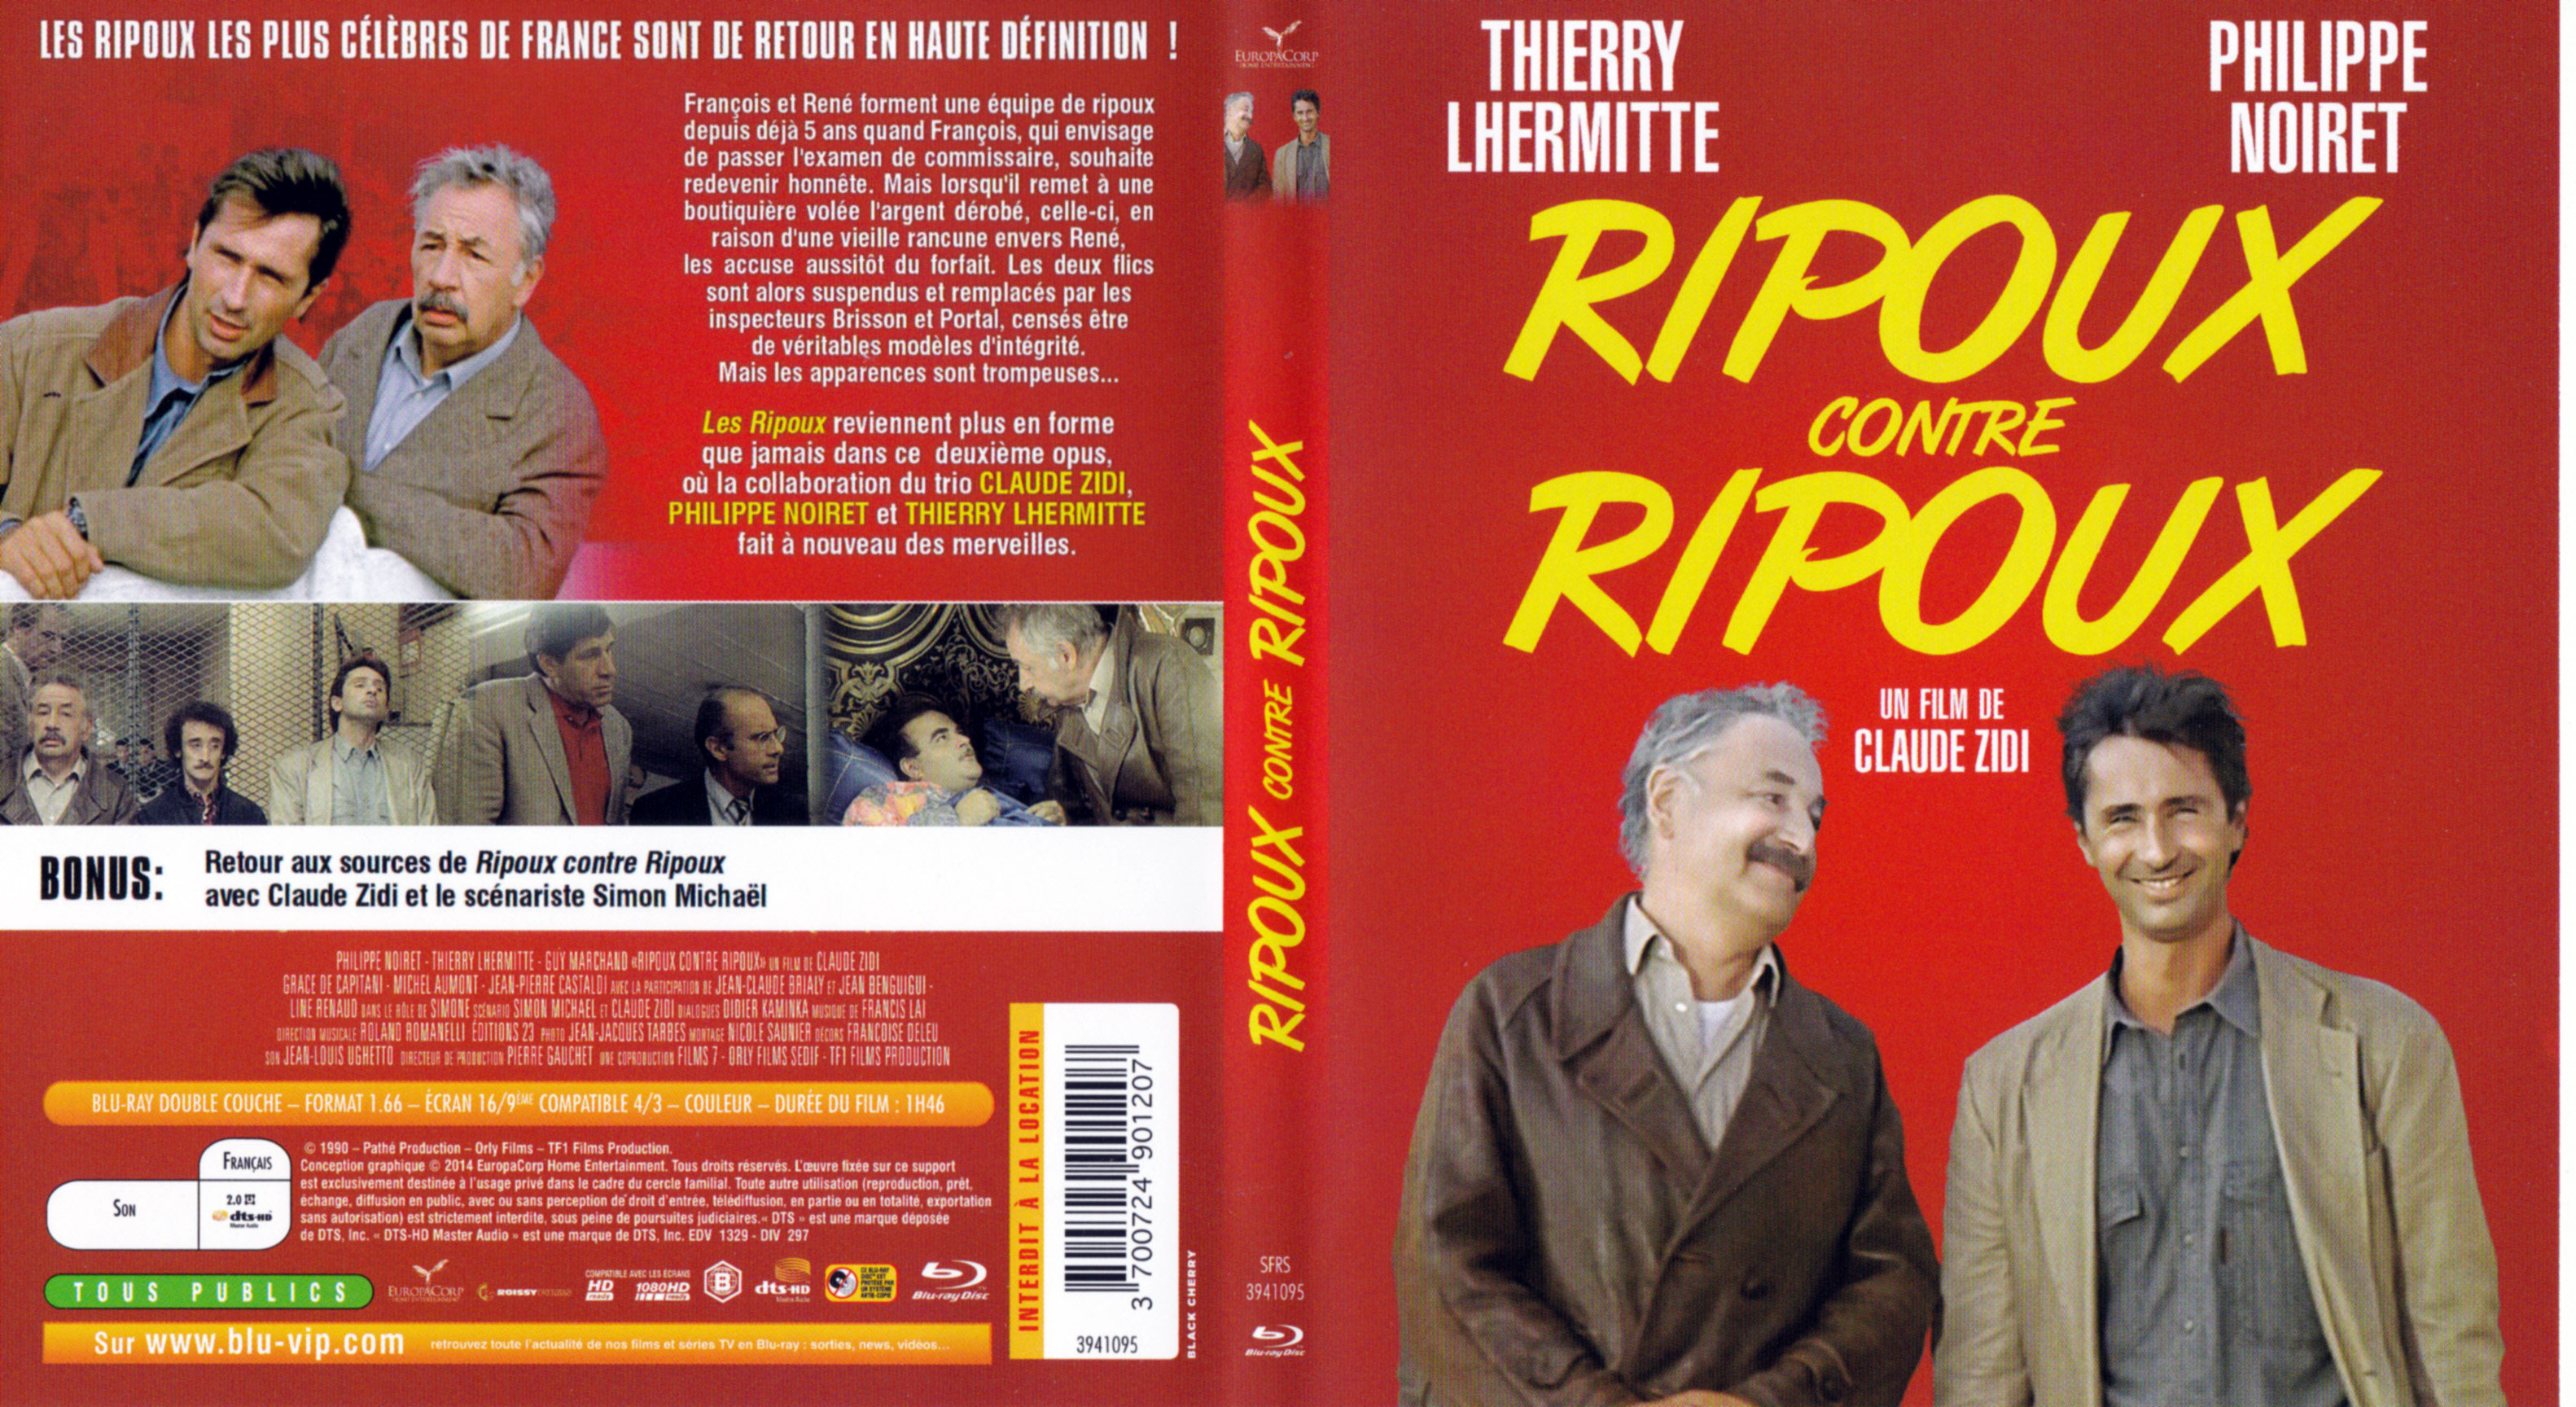 Jaquette DVD Ripoux contre ripoux (BLU-RAY)